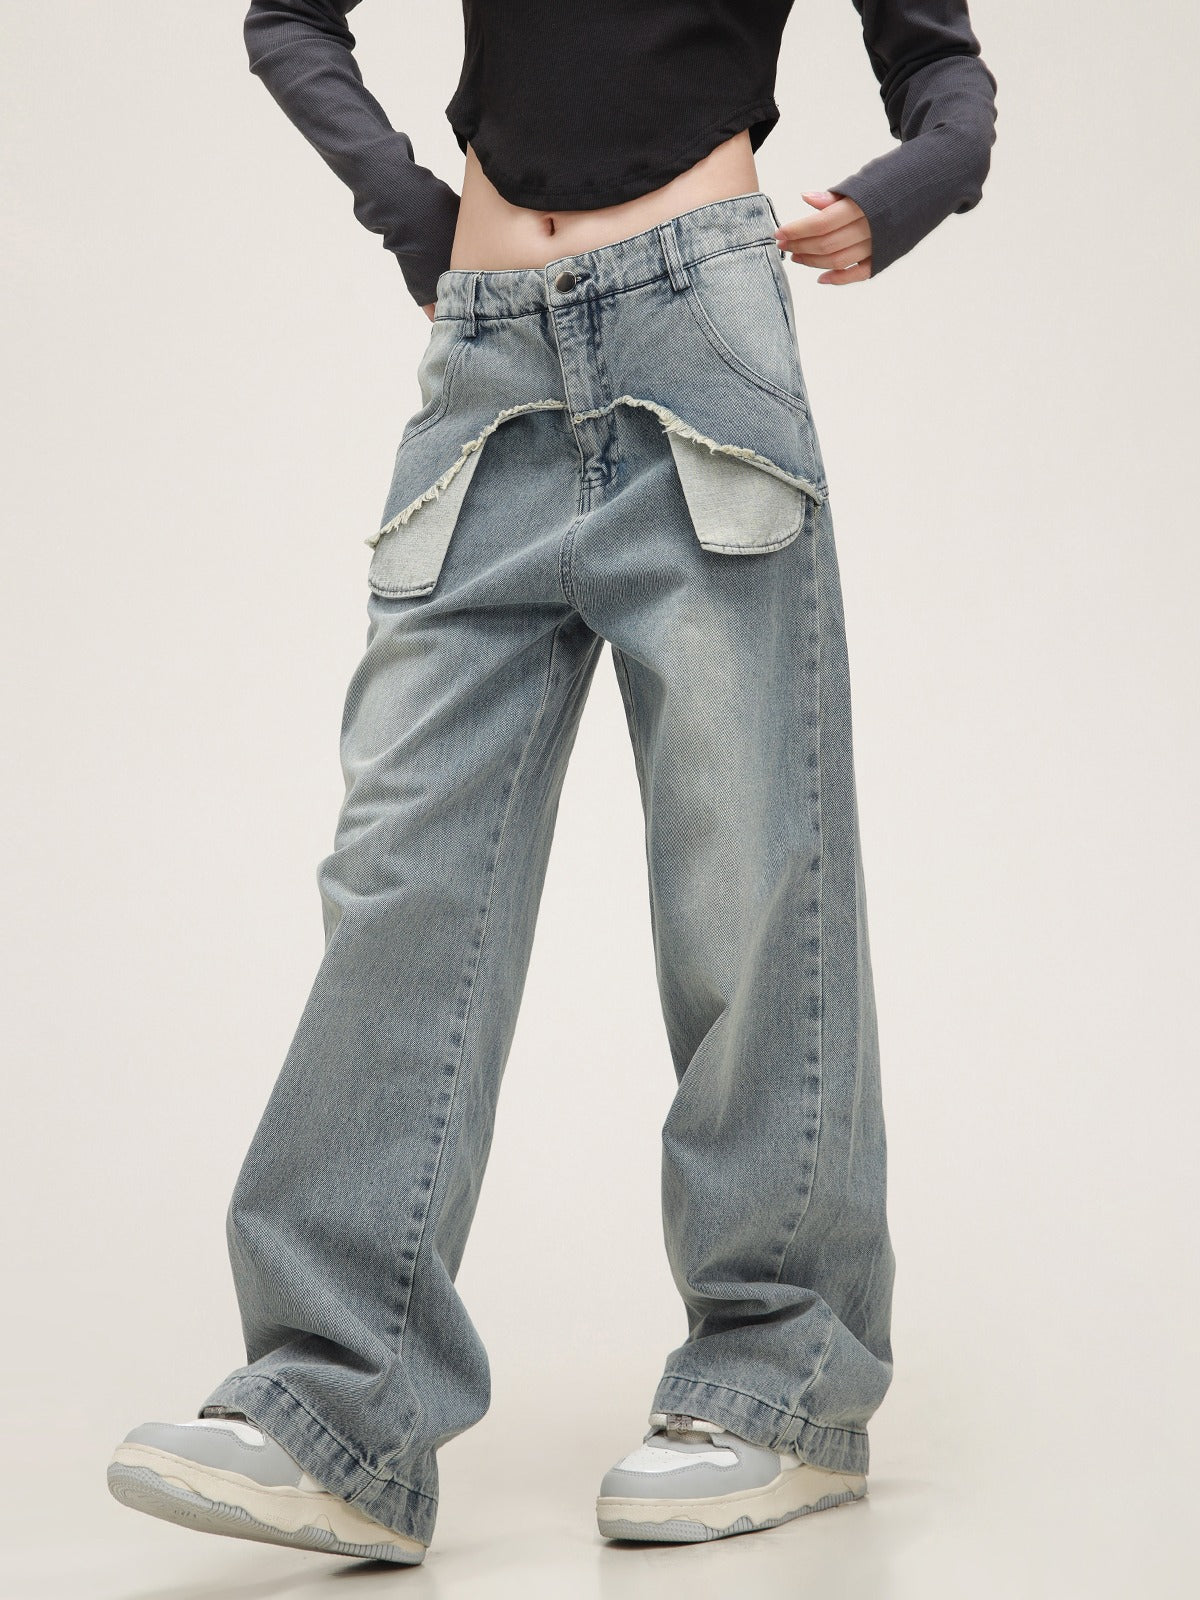 American Vintage Worn-Out Jeans Pants